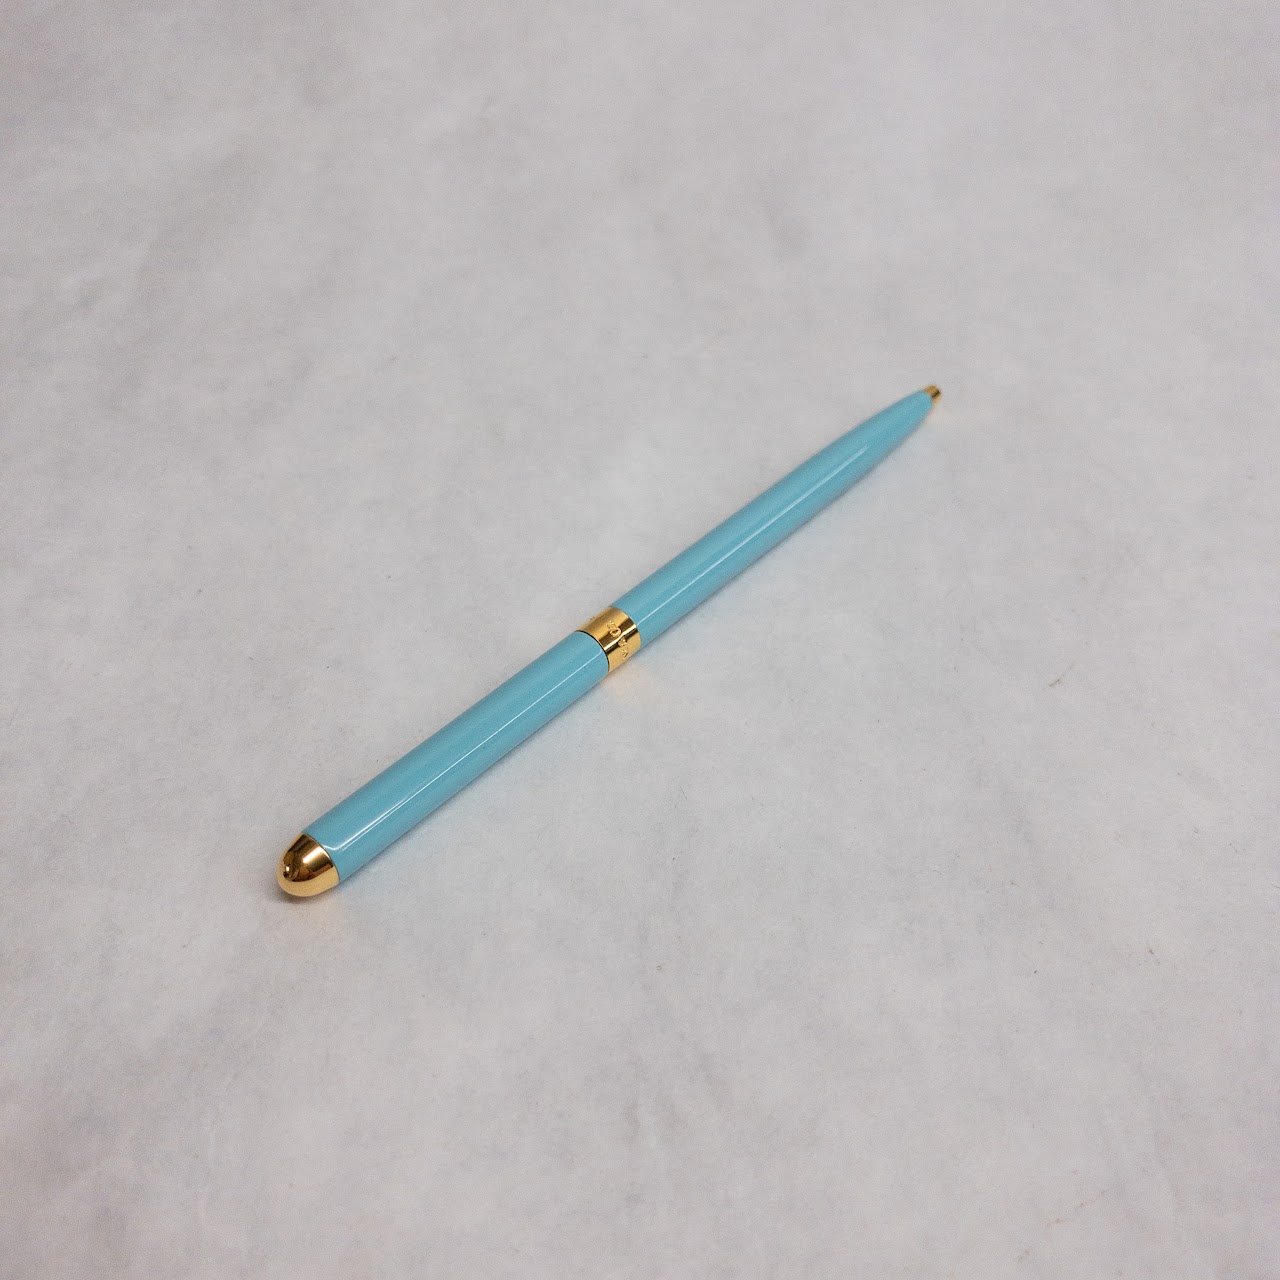 Tiffany & Co. Blue Purse Pen